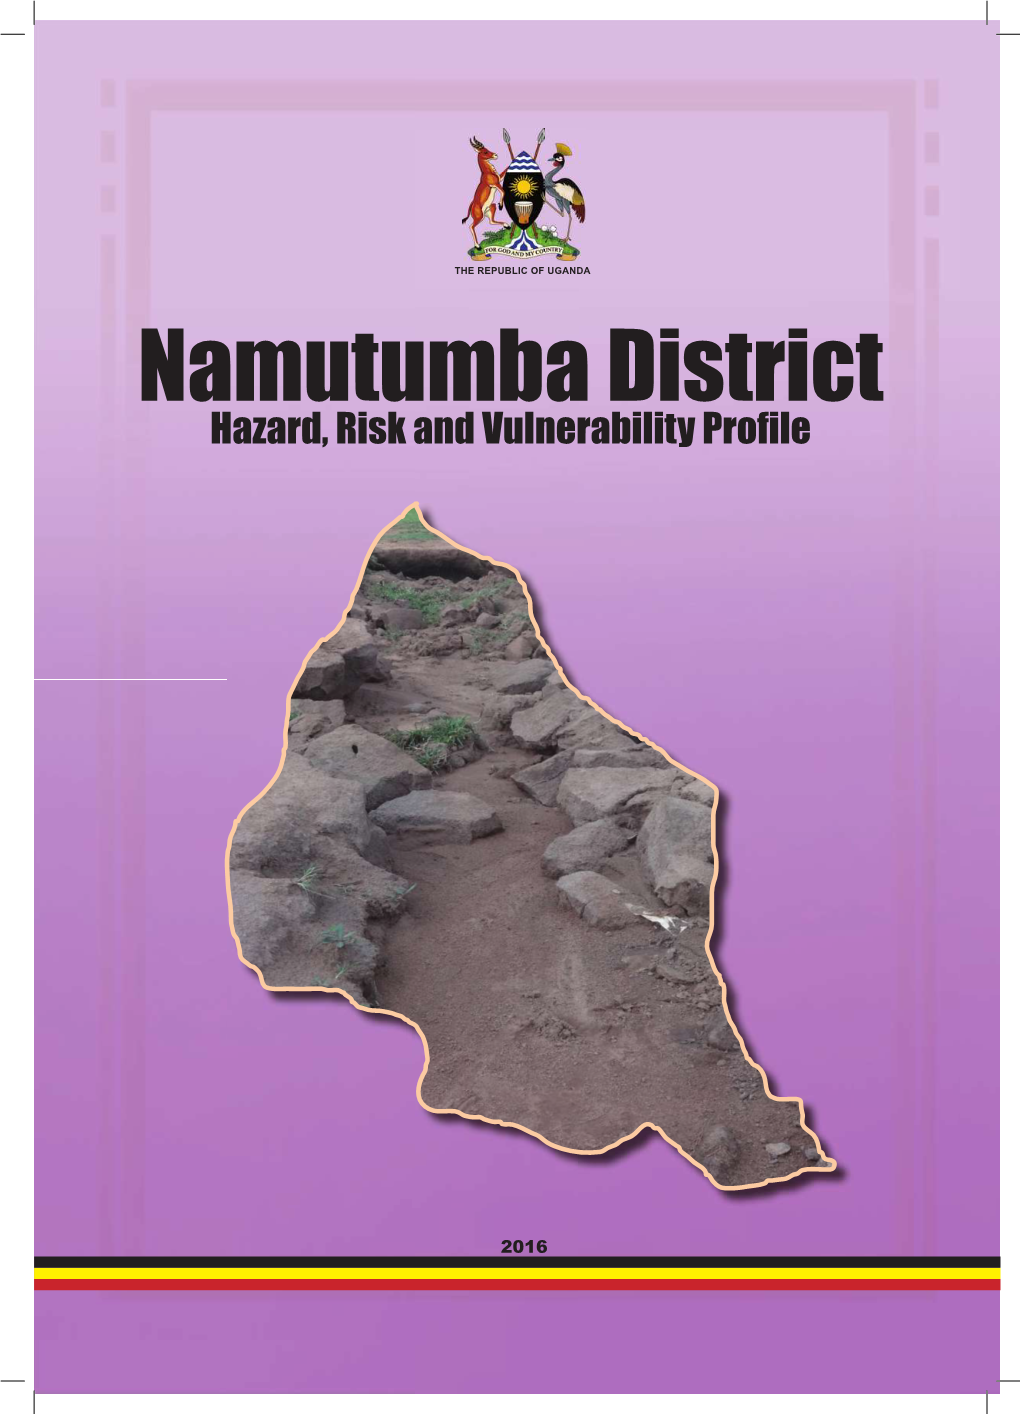 Namutumba District HRV Profile.Pdf